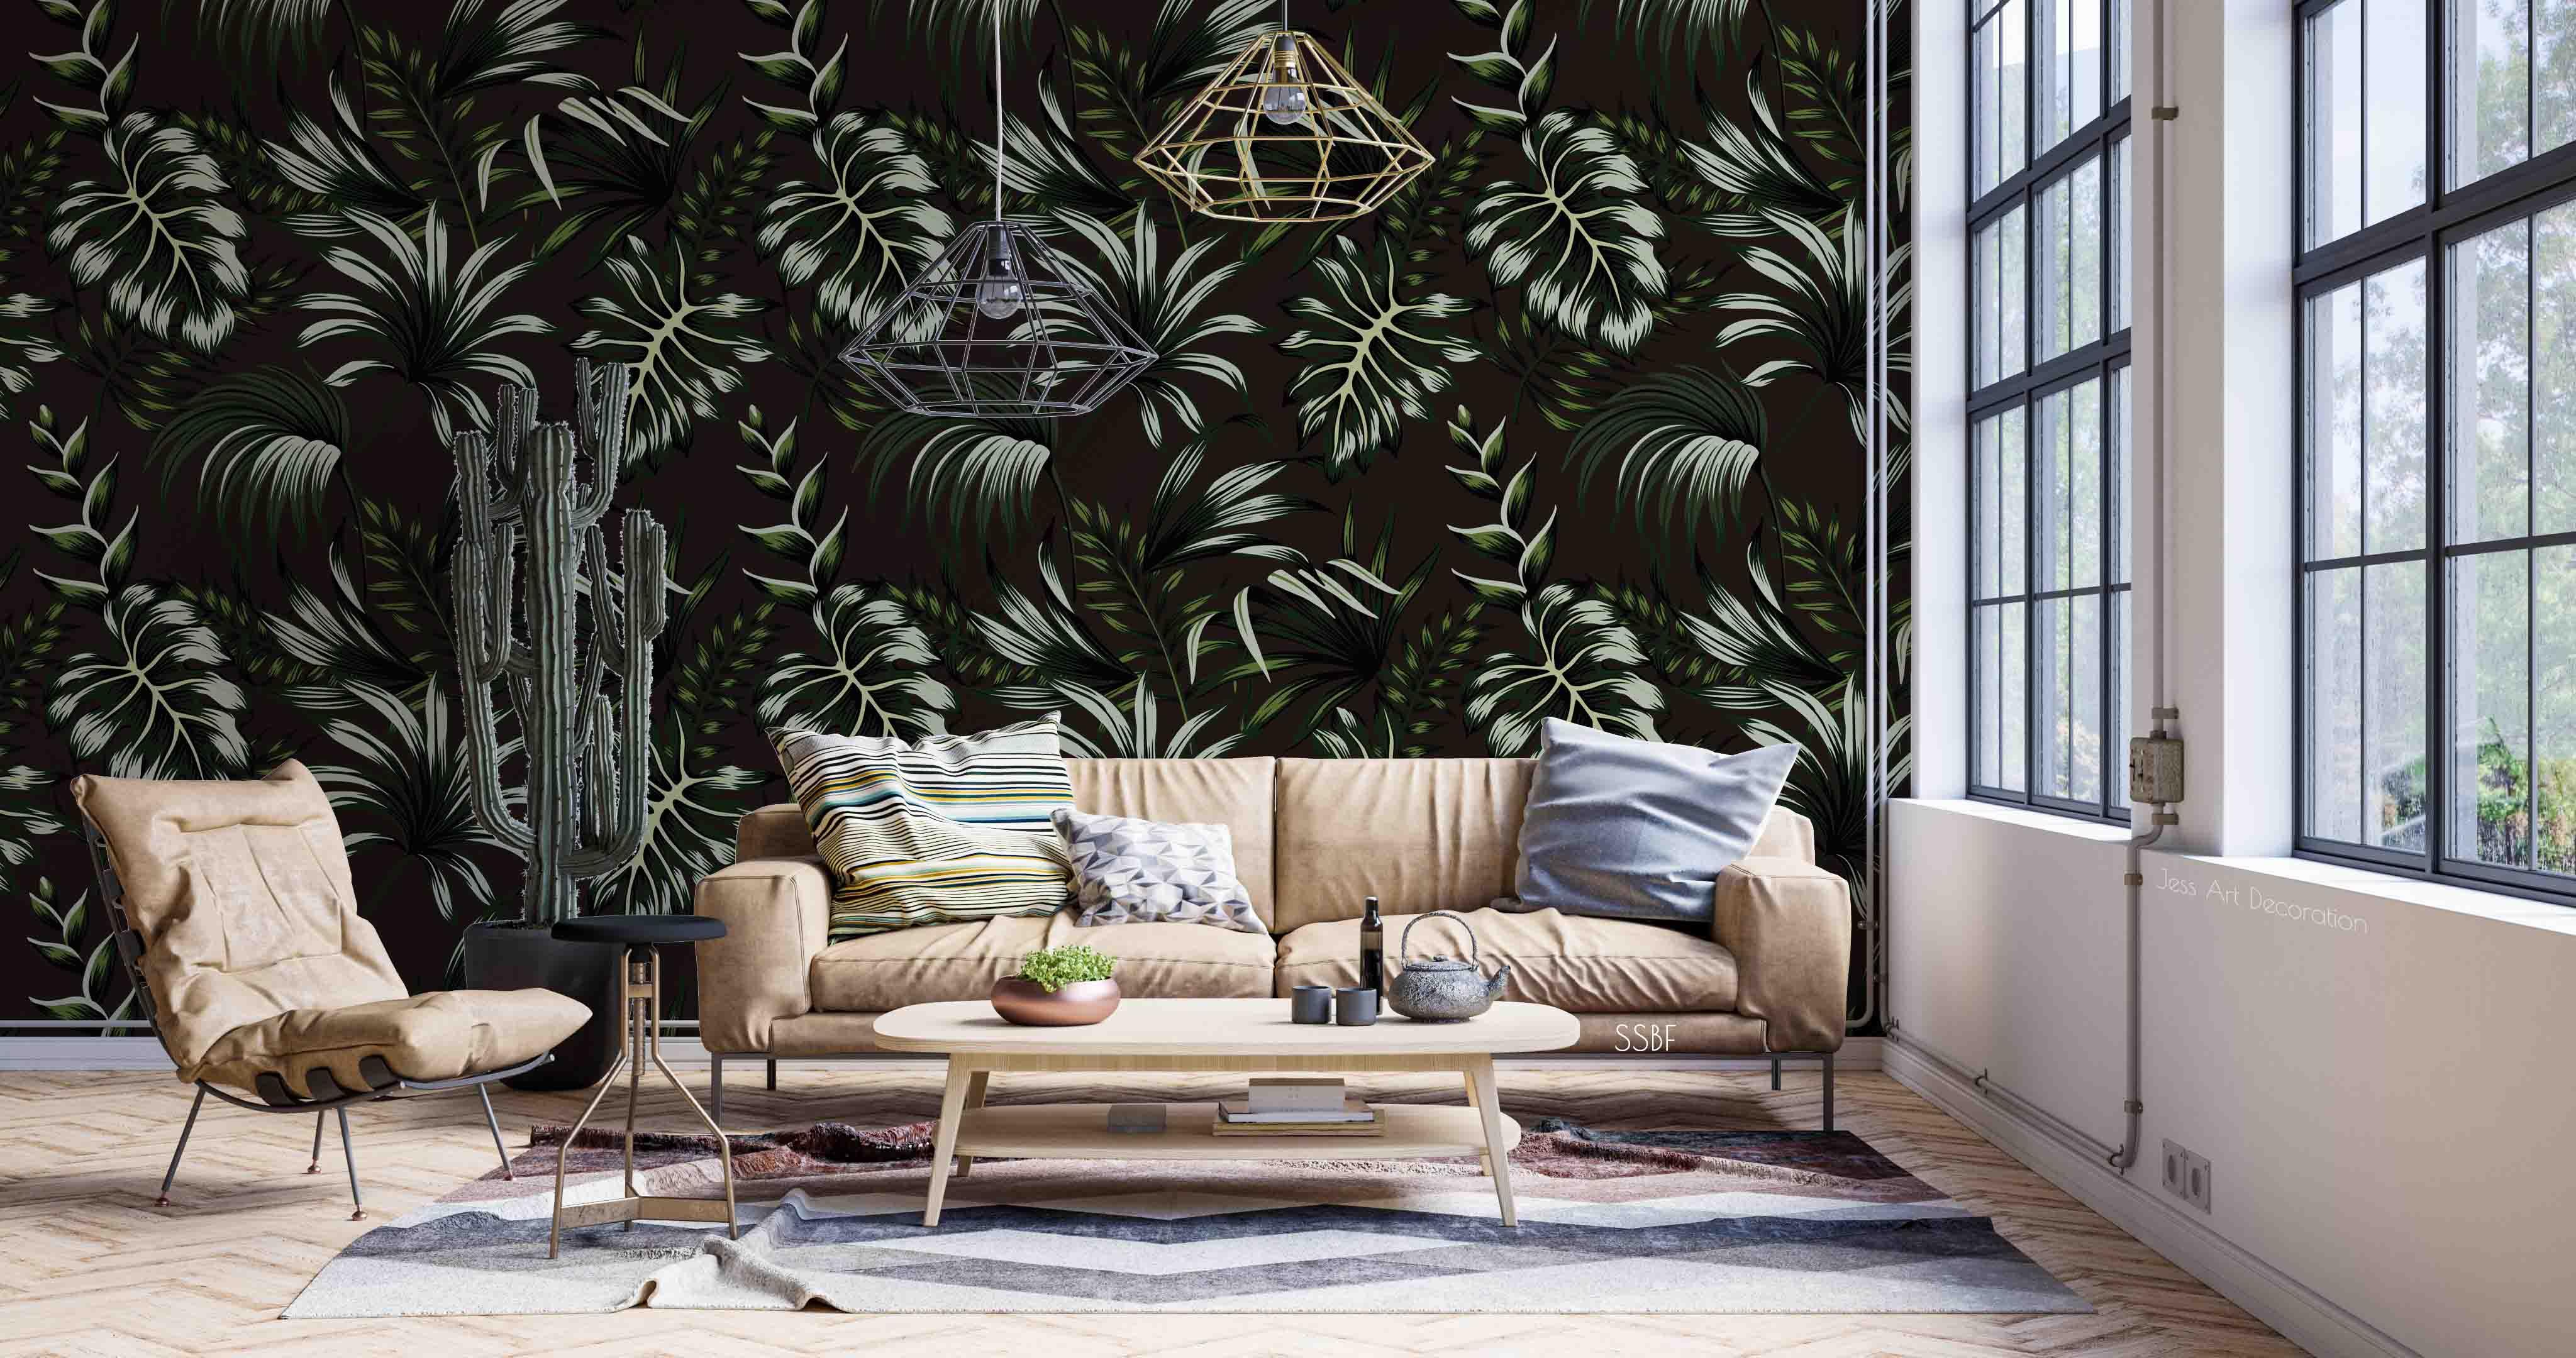 3D Vintage Plants Leaves Background Pattern Wall Mural Wallpaper GD 3603- Jess Art Decoration